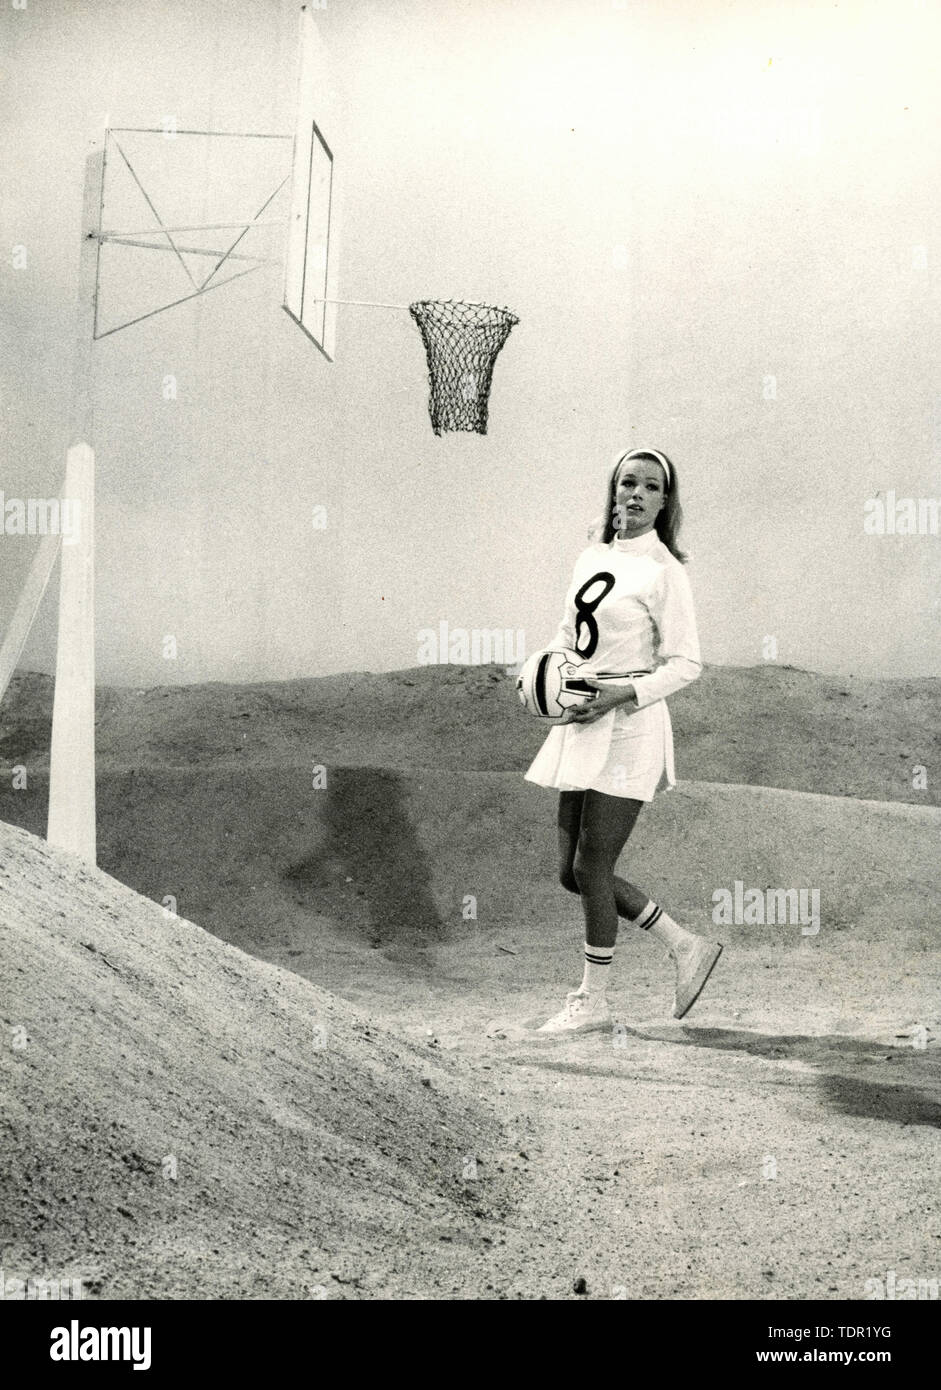 L'actrice allemande Solvi Stubing jouant au basket-ball, 1970 Banque D'Images